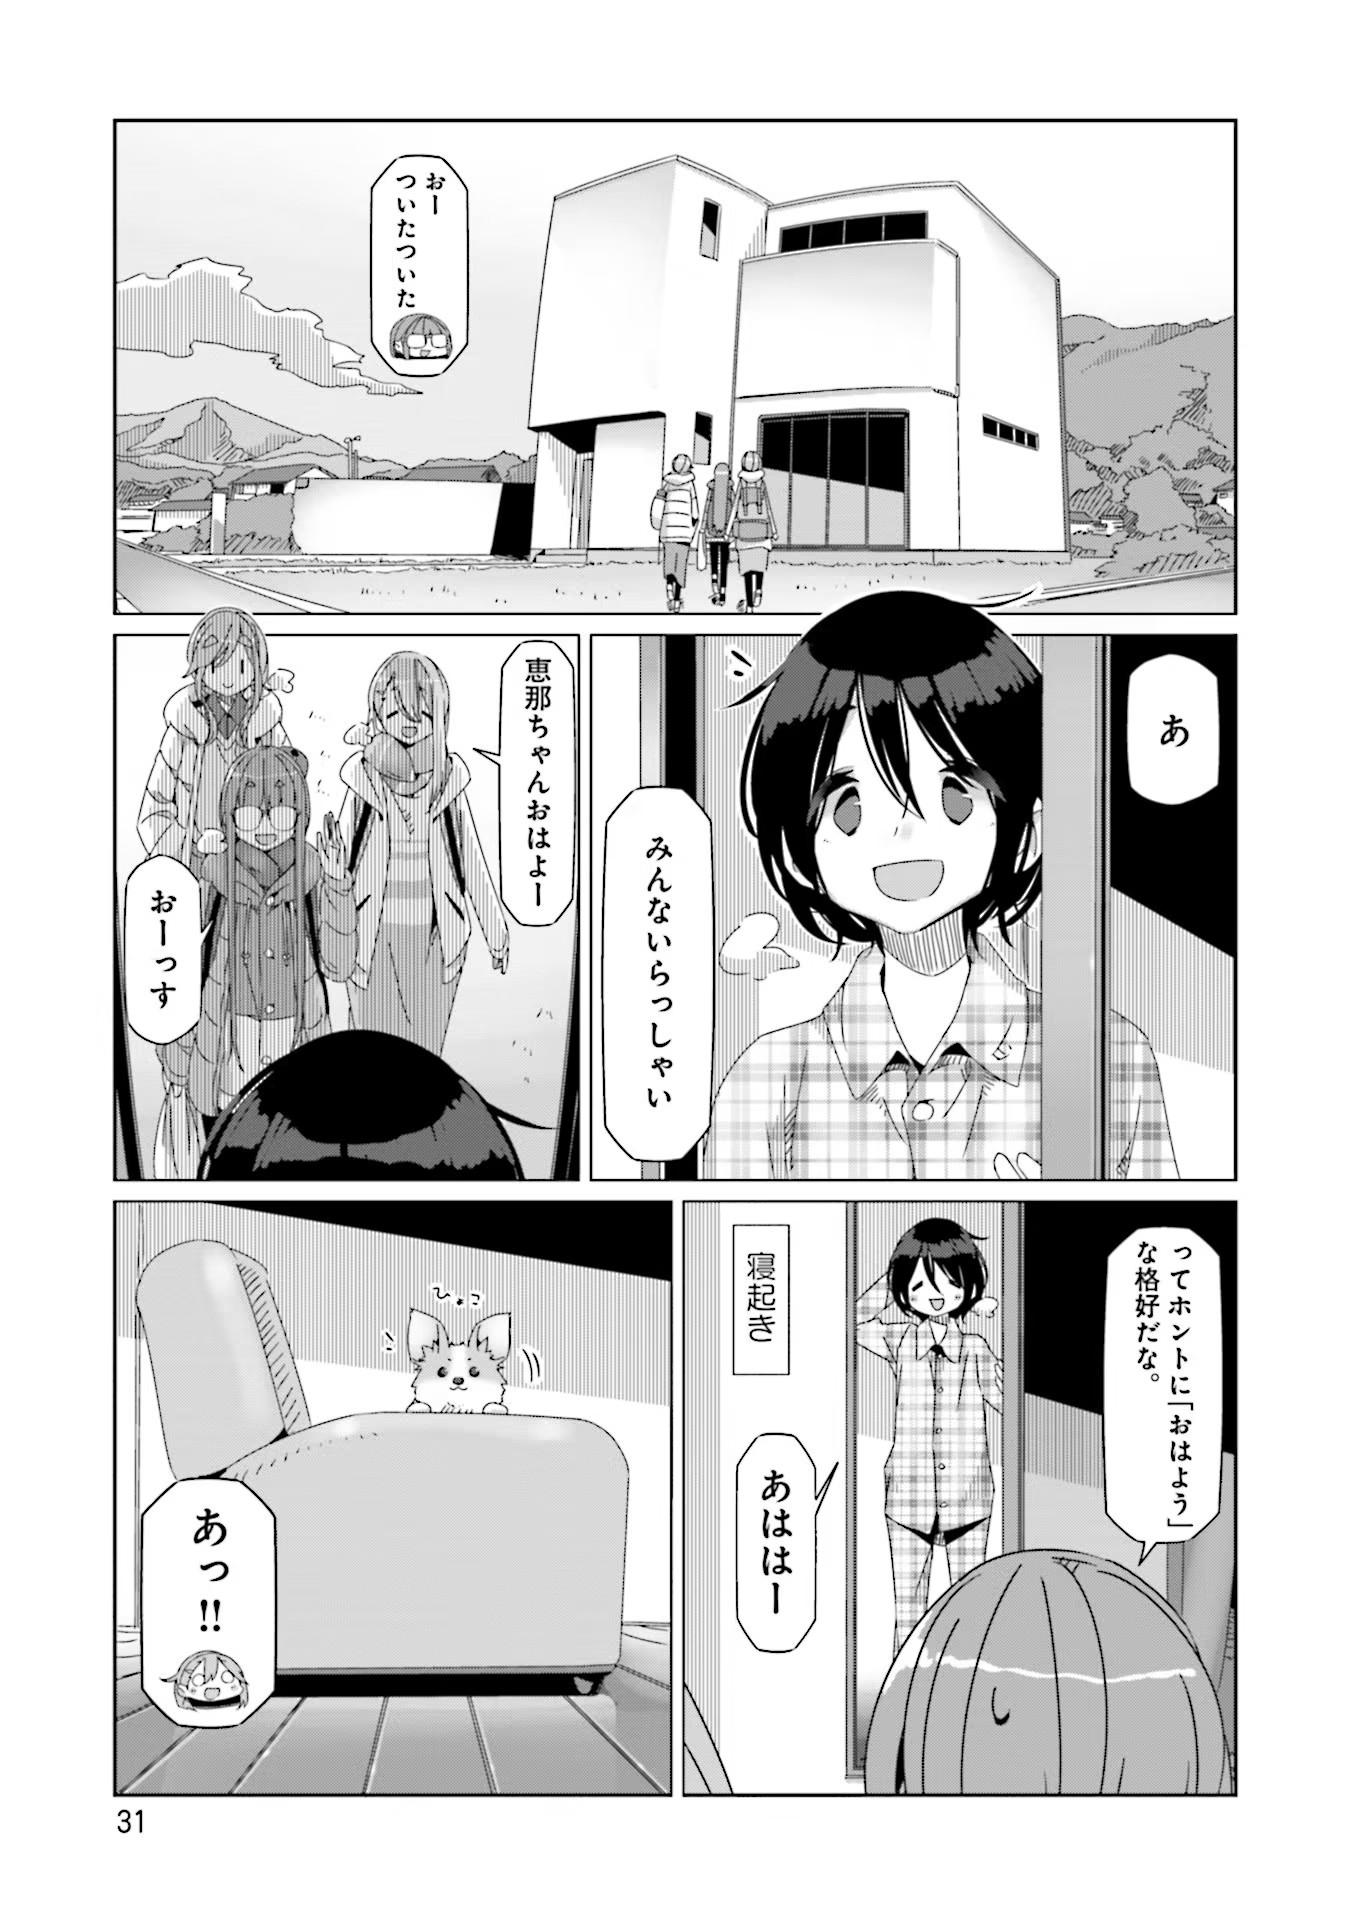 Yuru Camp - Chapter 54 - Page 3